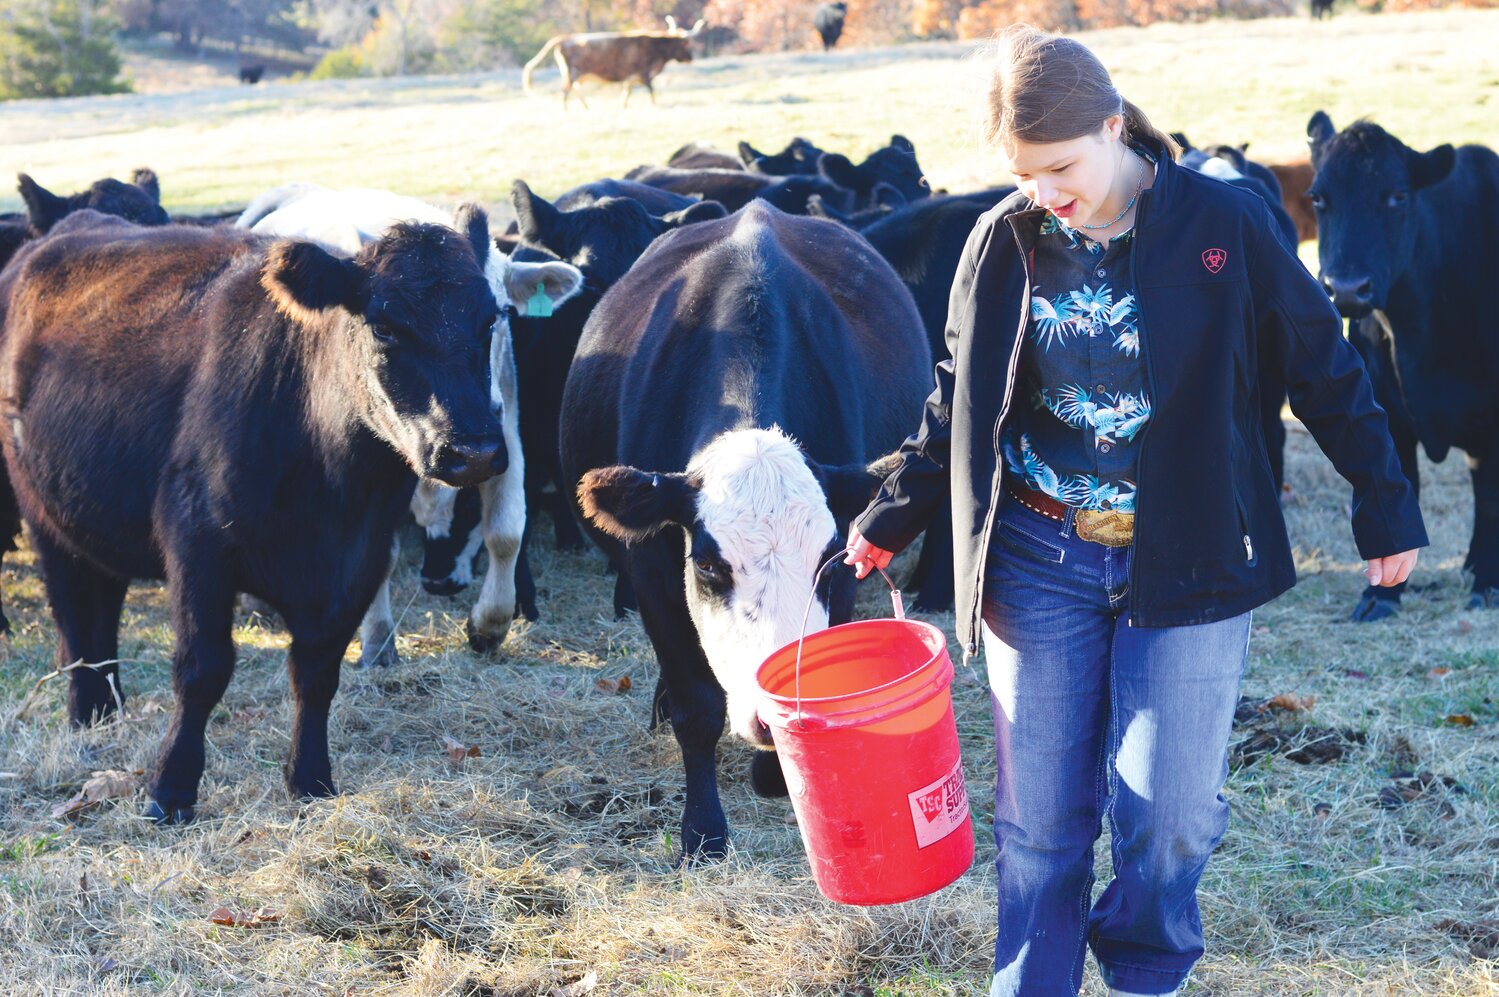 Kya enjoys taking care of the cattle.